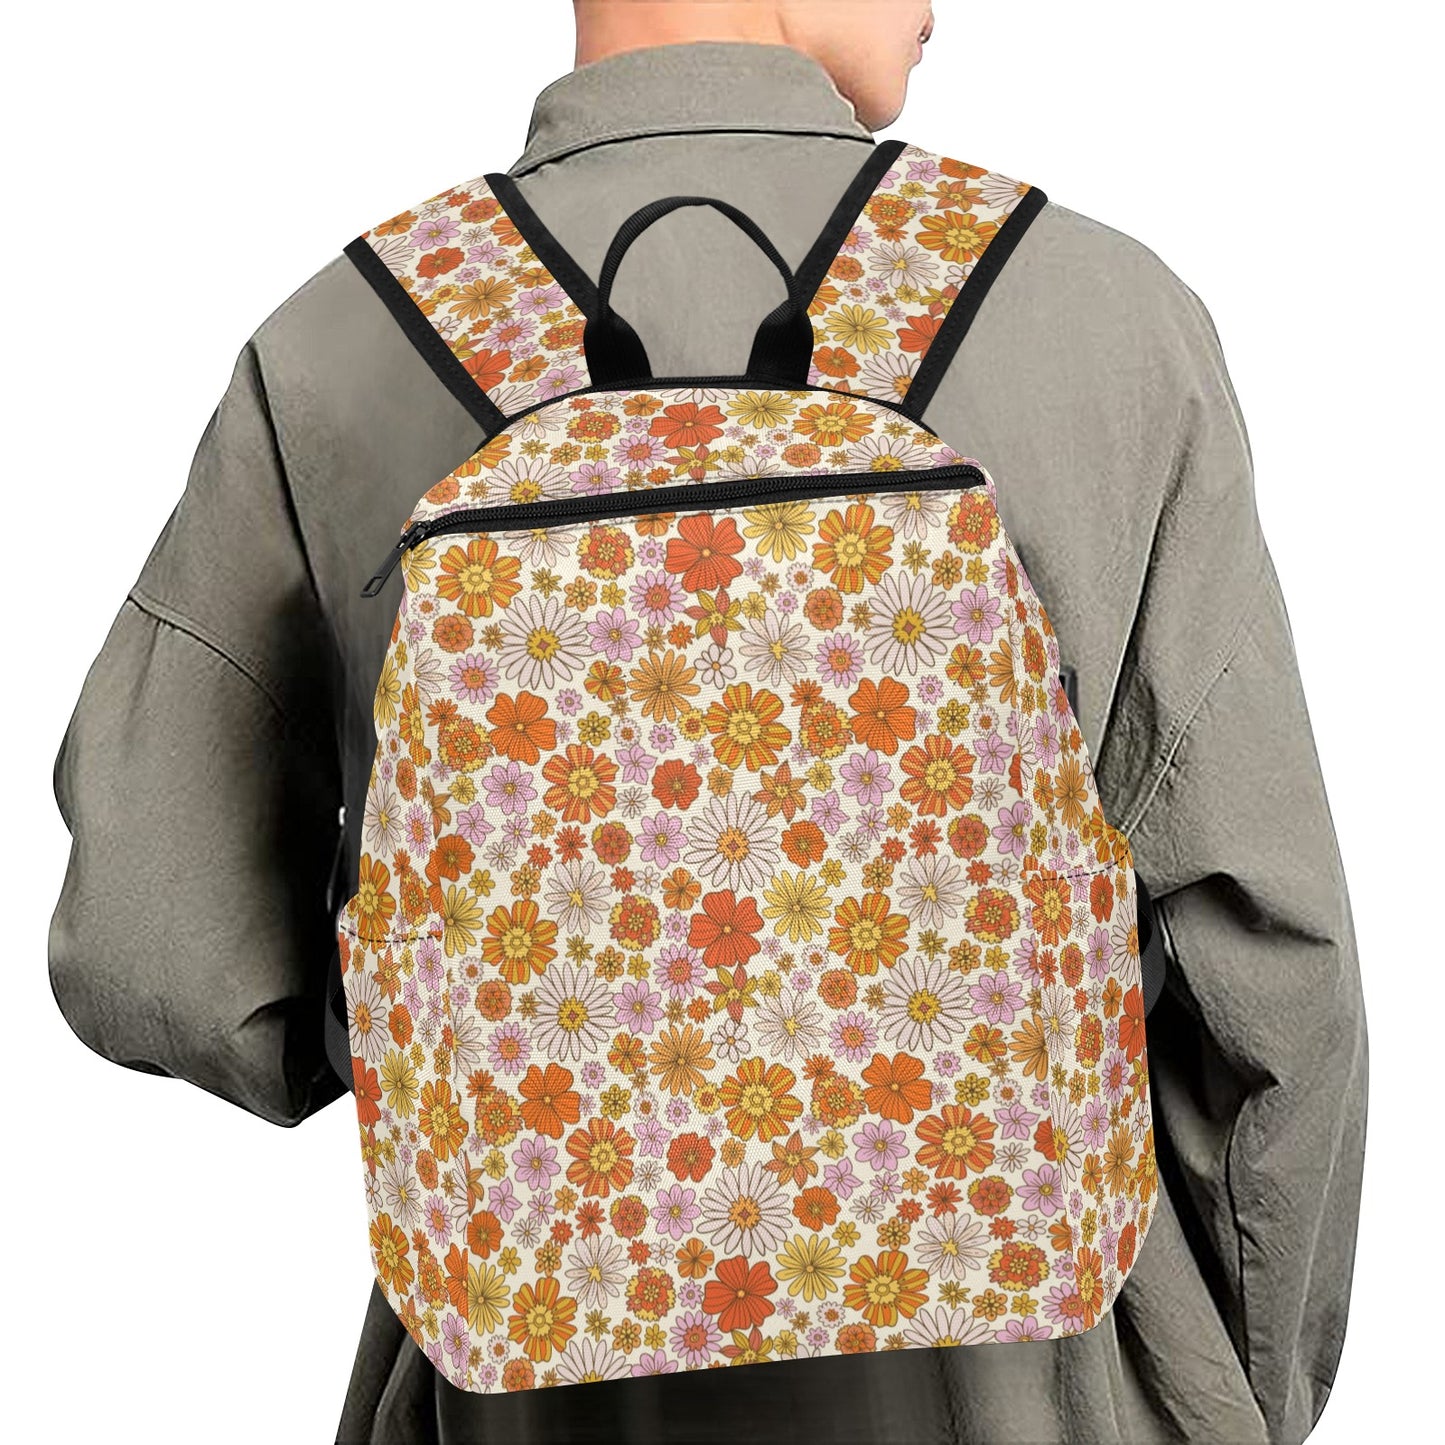 Pink Floral Backpack, Retro Vintage 70s Flowers Men Women Kids Gift Him Her School College Cool Waterproof Side Pockets Laptop Aesthetic Bag